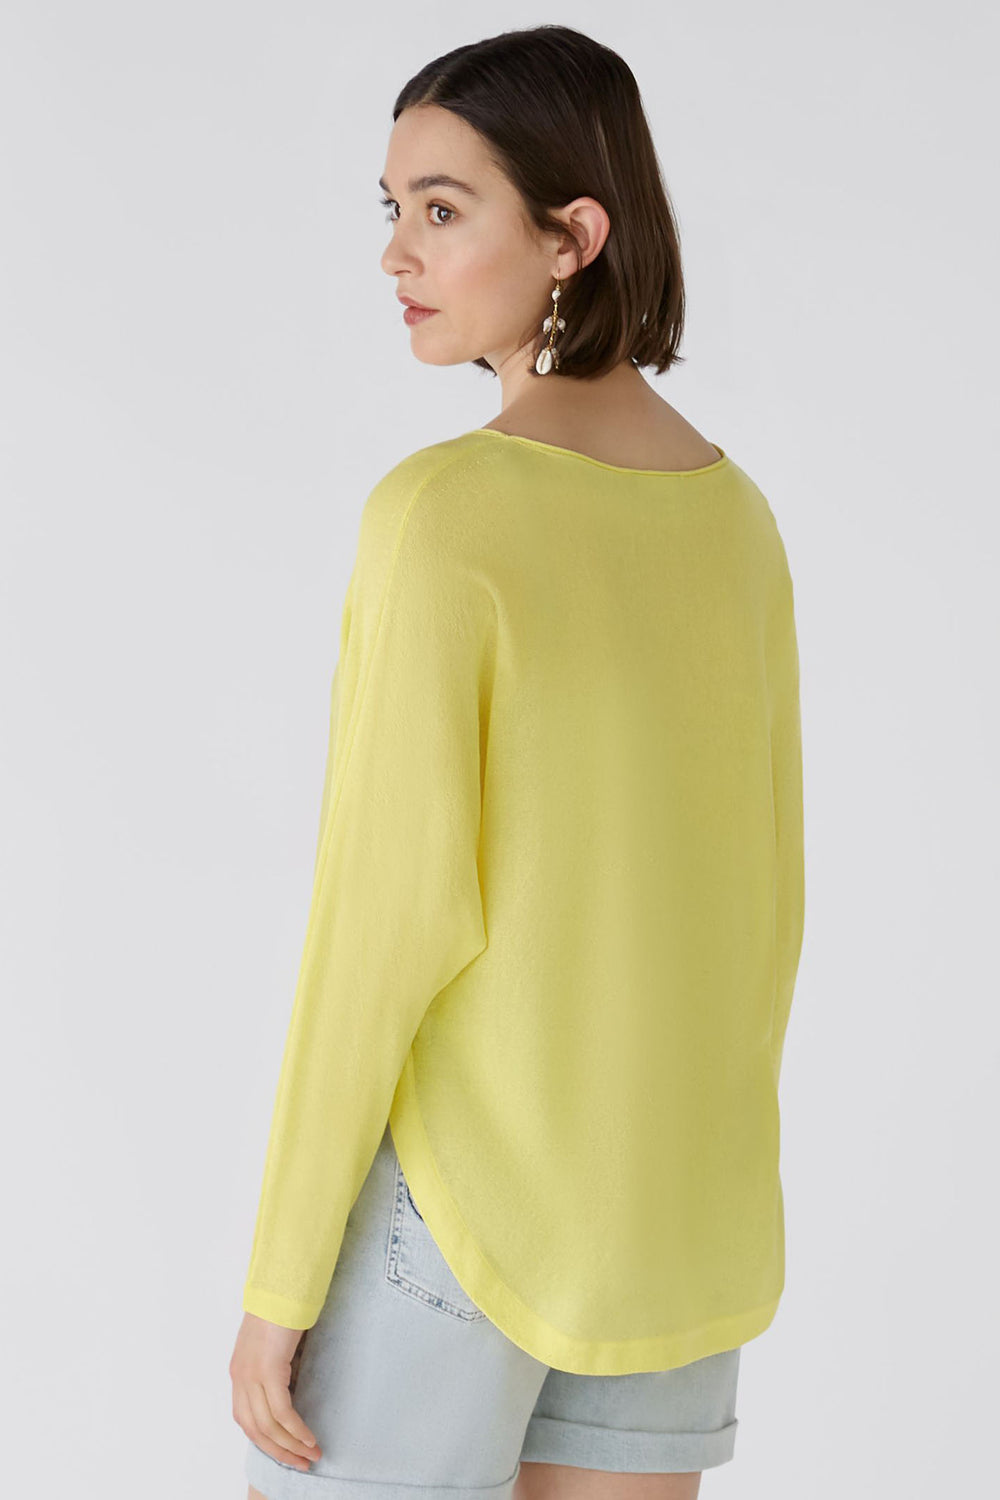 Oui 87457 Yellow Shirt Hem Jumper - Olivia Grace Fashion